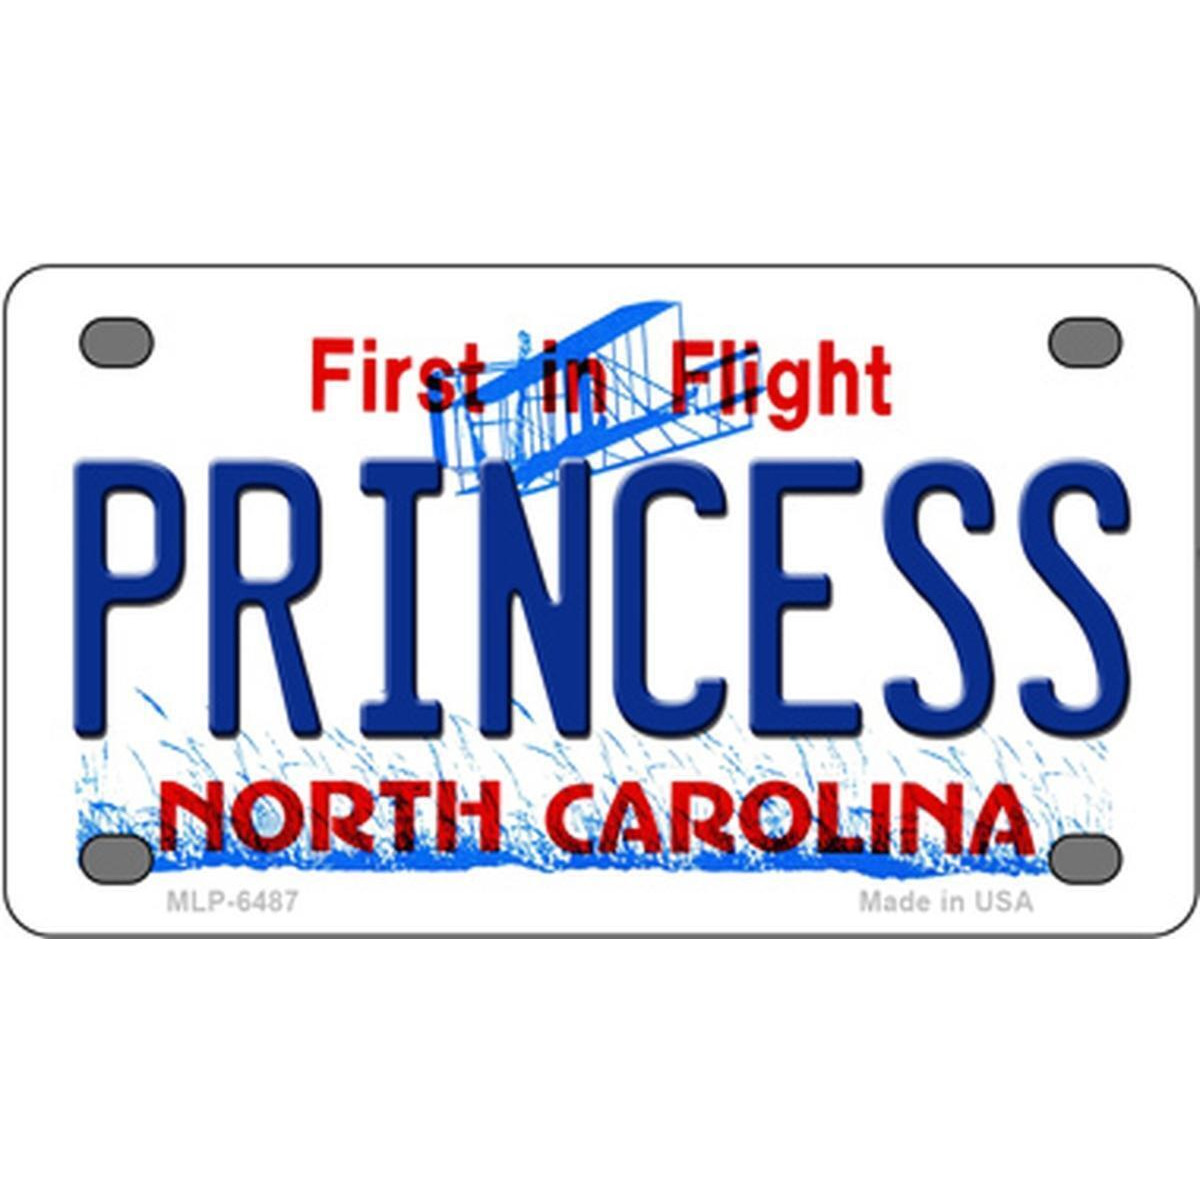 Smart Blonde MLP-6487 2.2 x 4 in. Princess North Carolina Novelty Mini Metal License Plate Tag